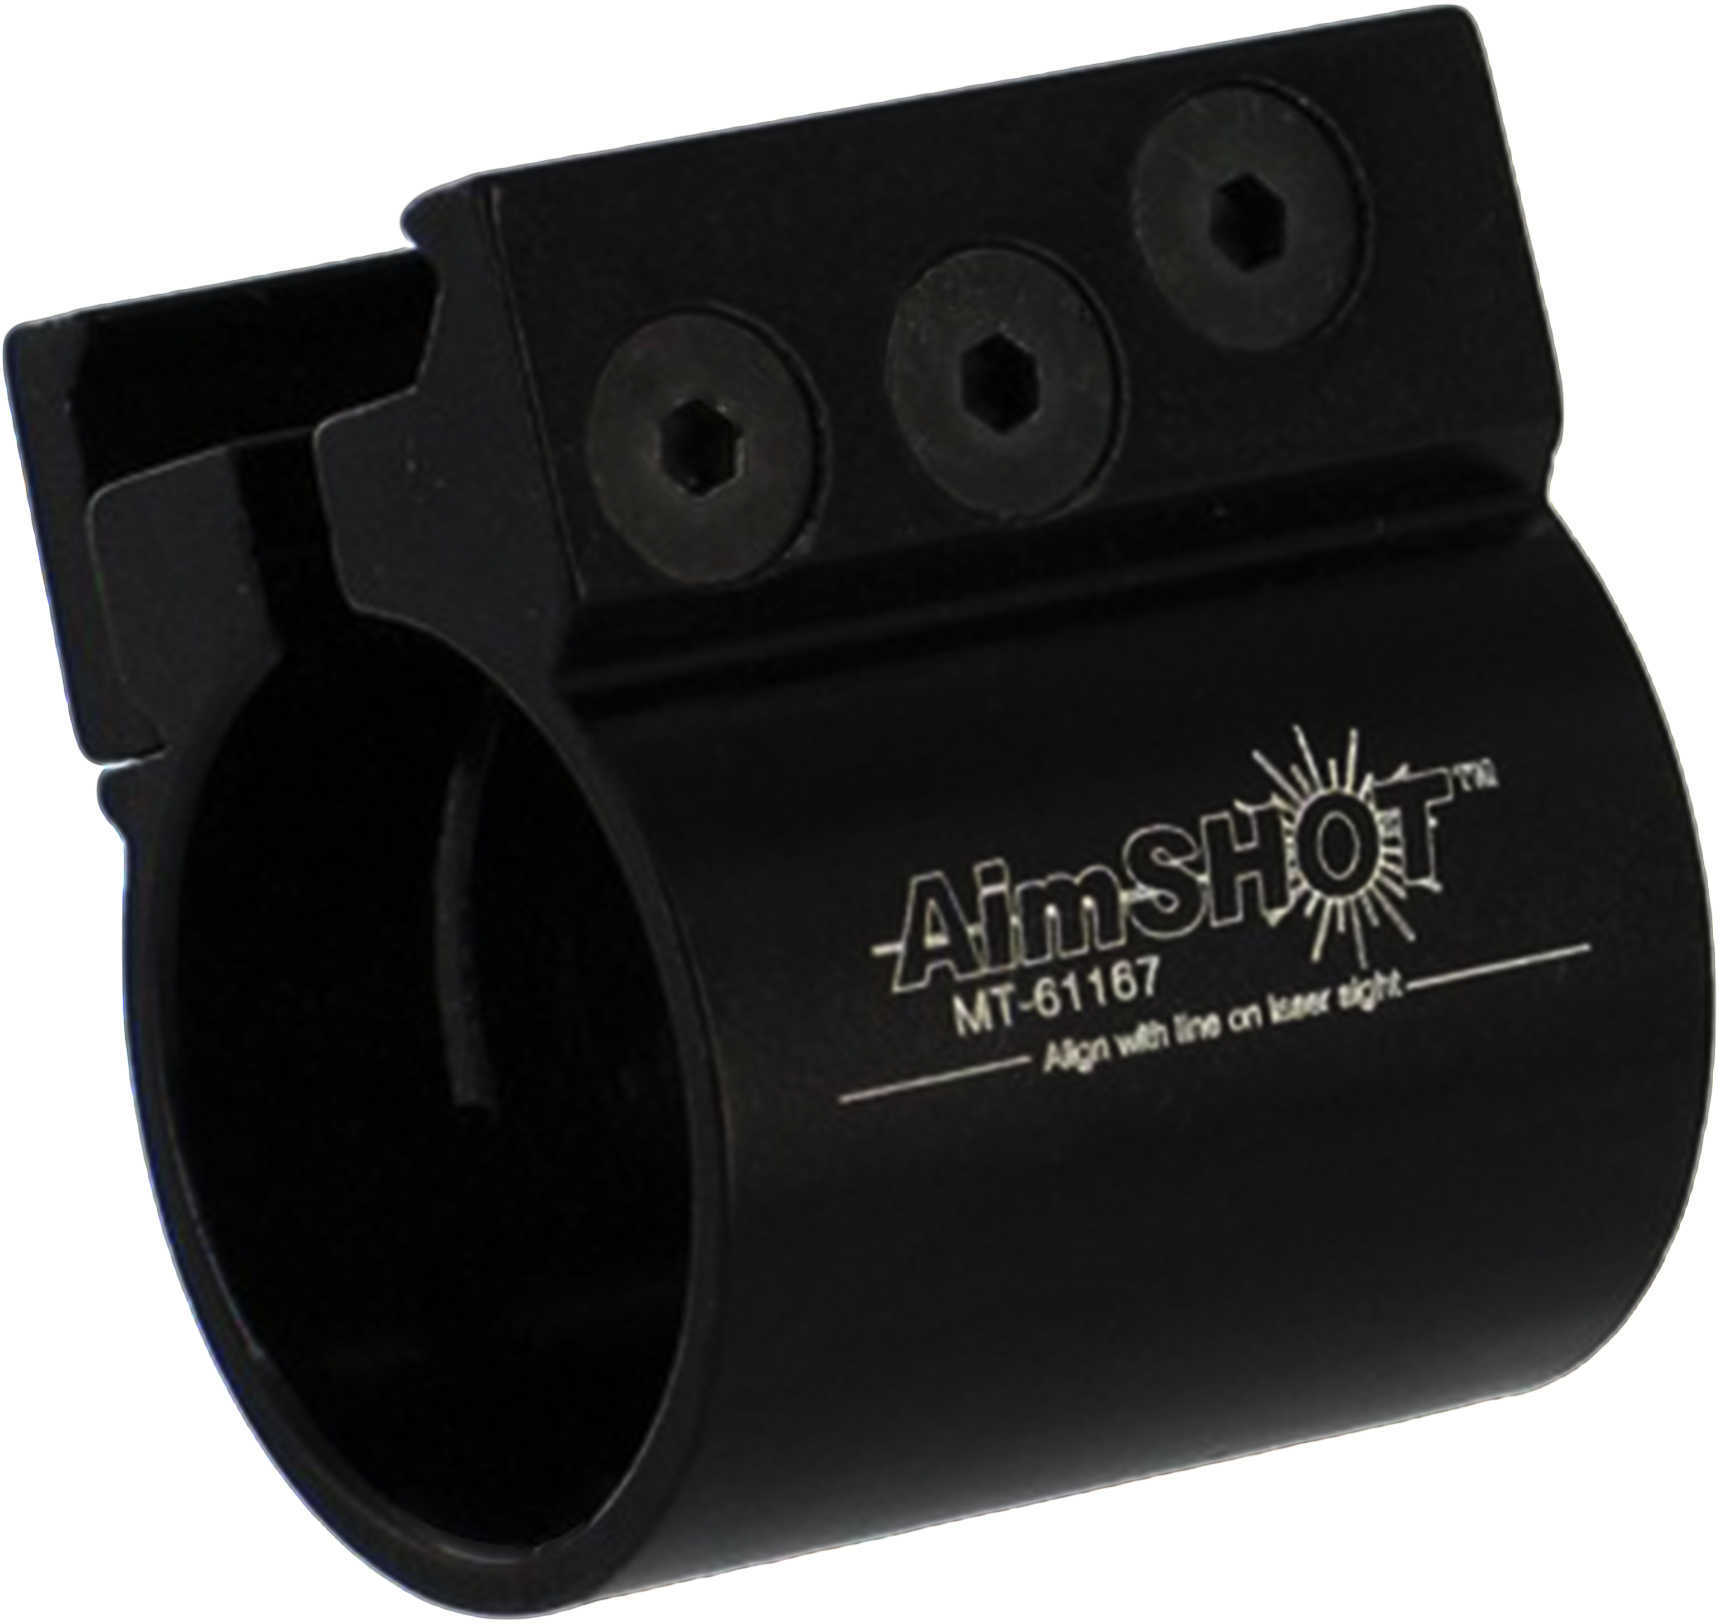 Aimshot Mt61167 Laser Mount For 8067 Weaver Style Matte Black Finish